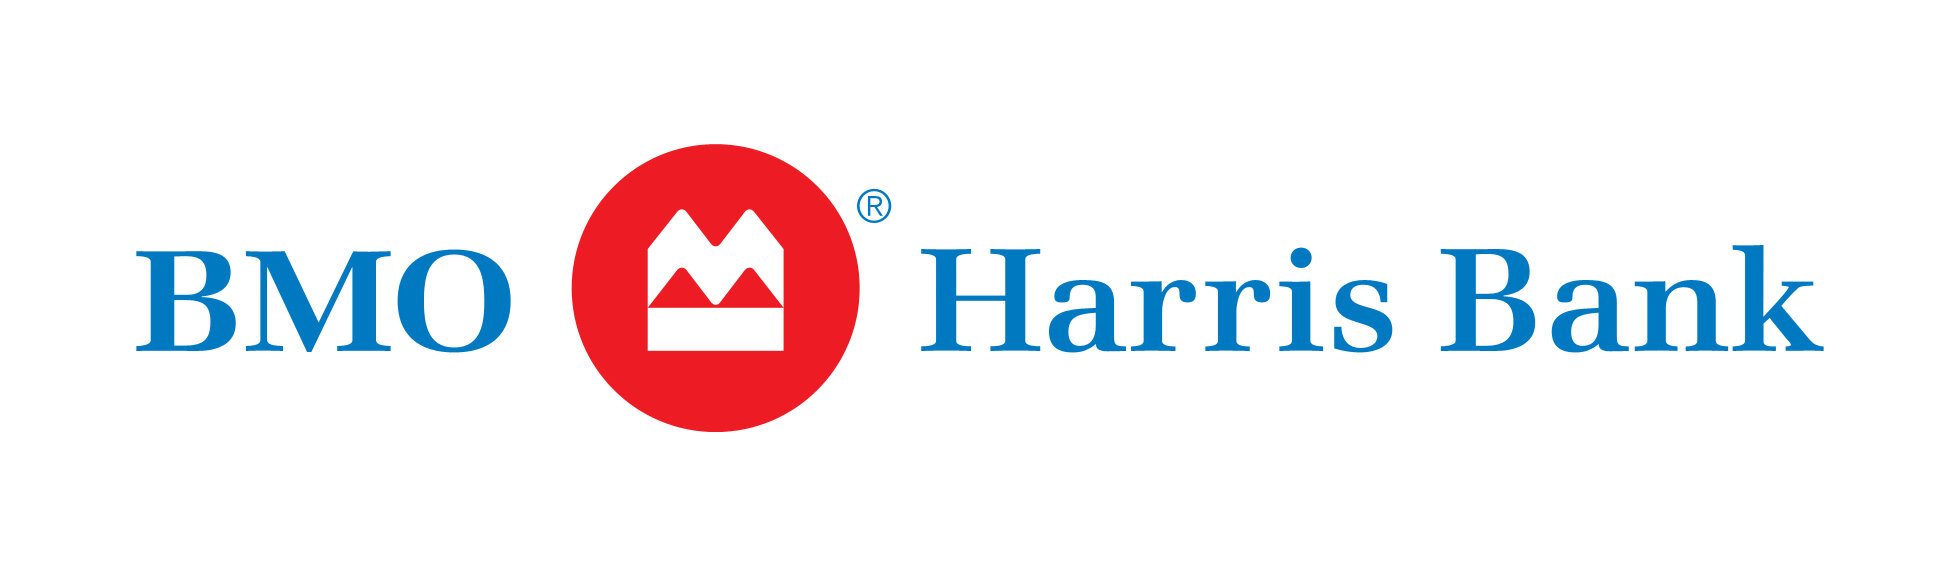 BMO-Harris-Bank-Logo-Color.jpeg